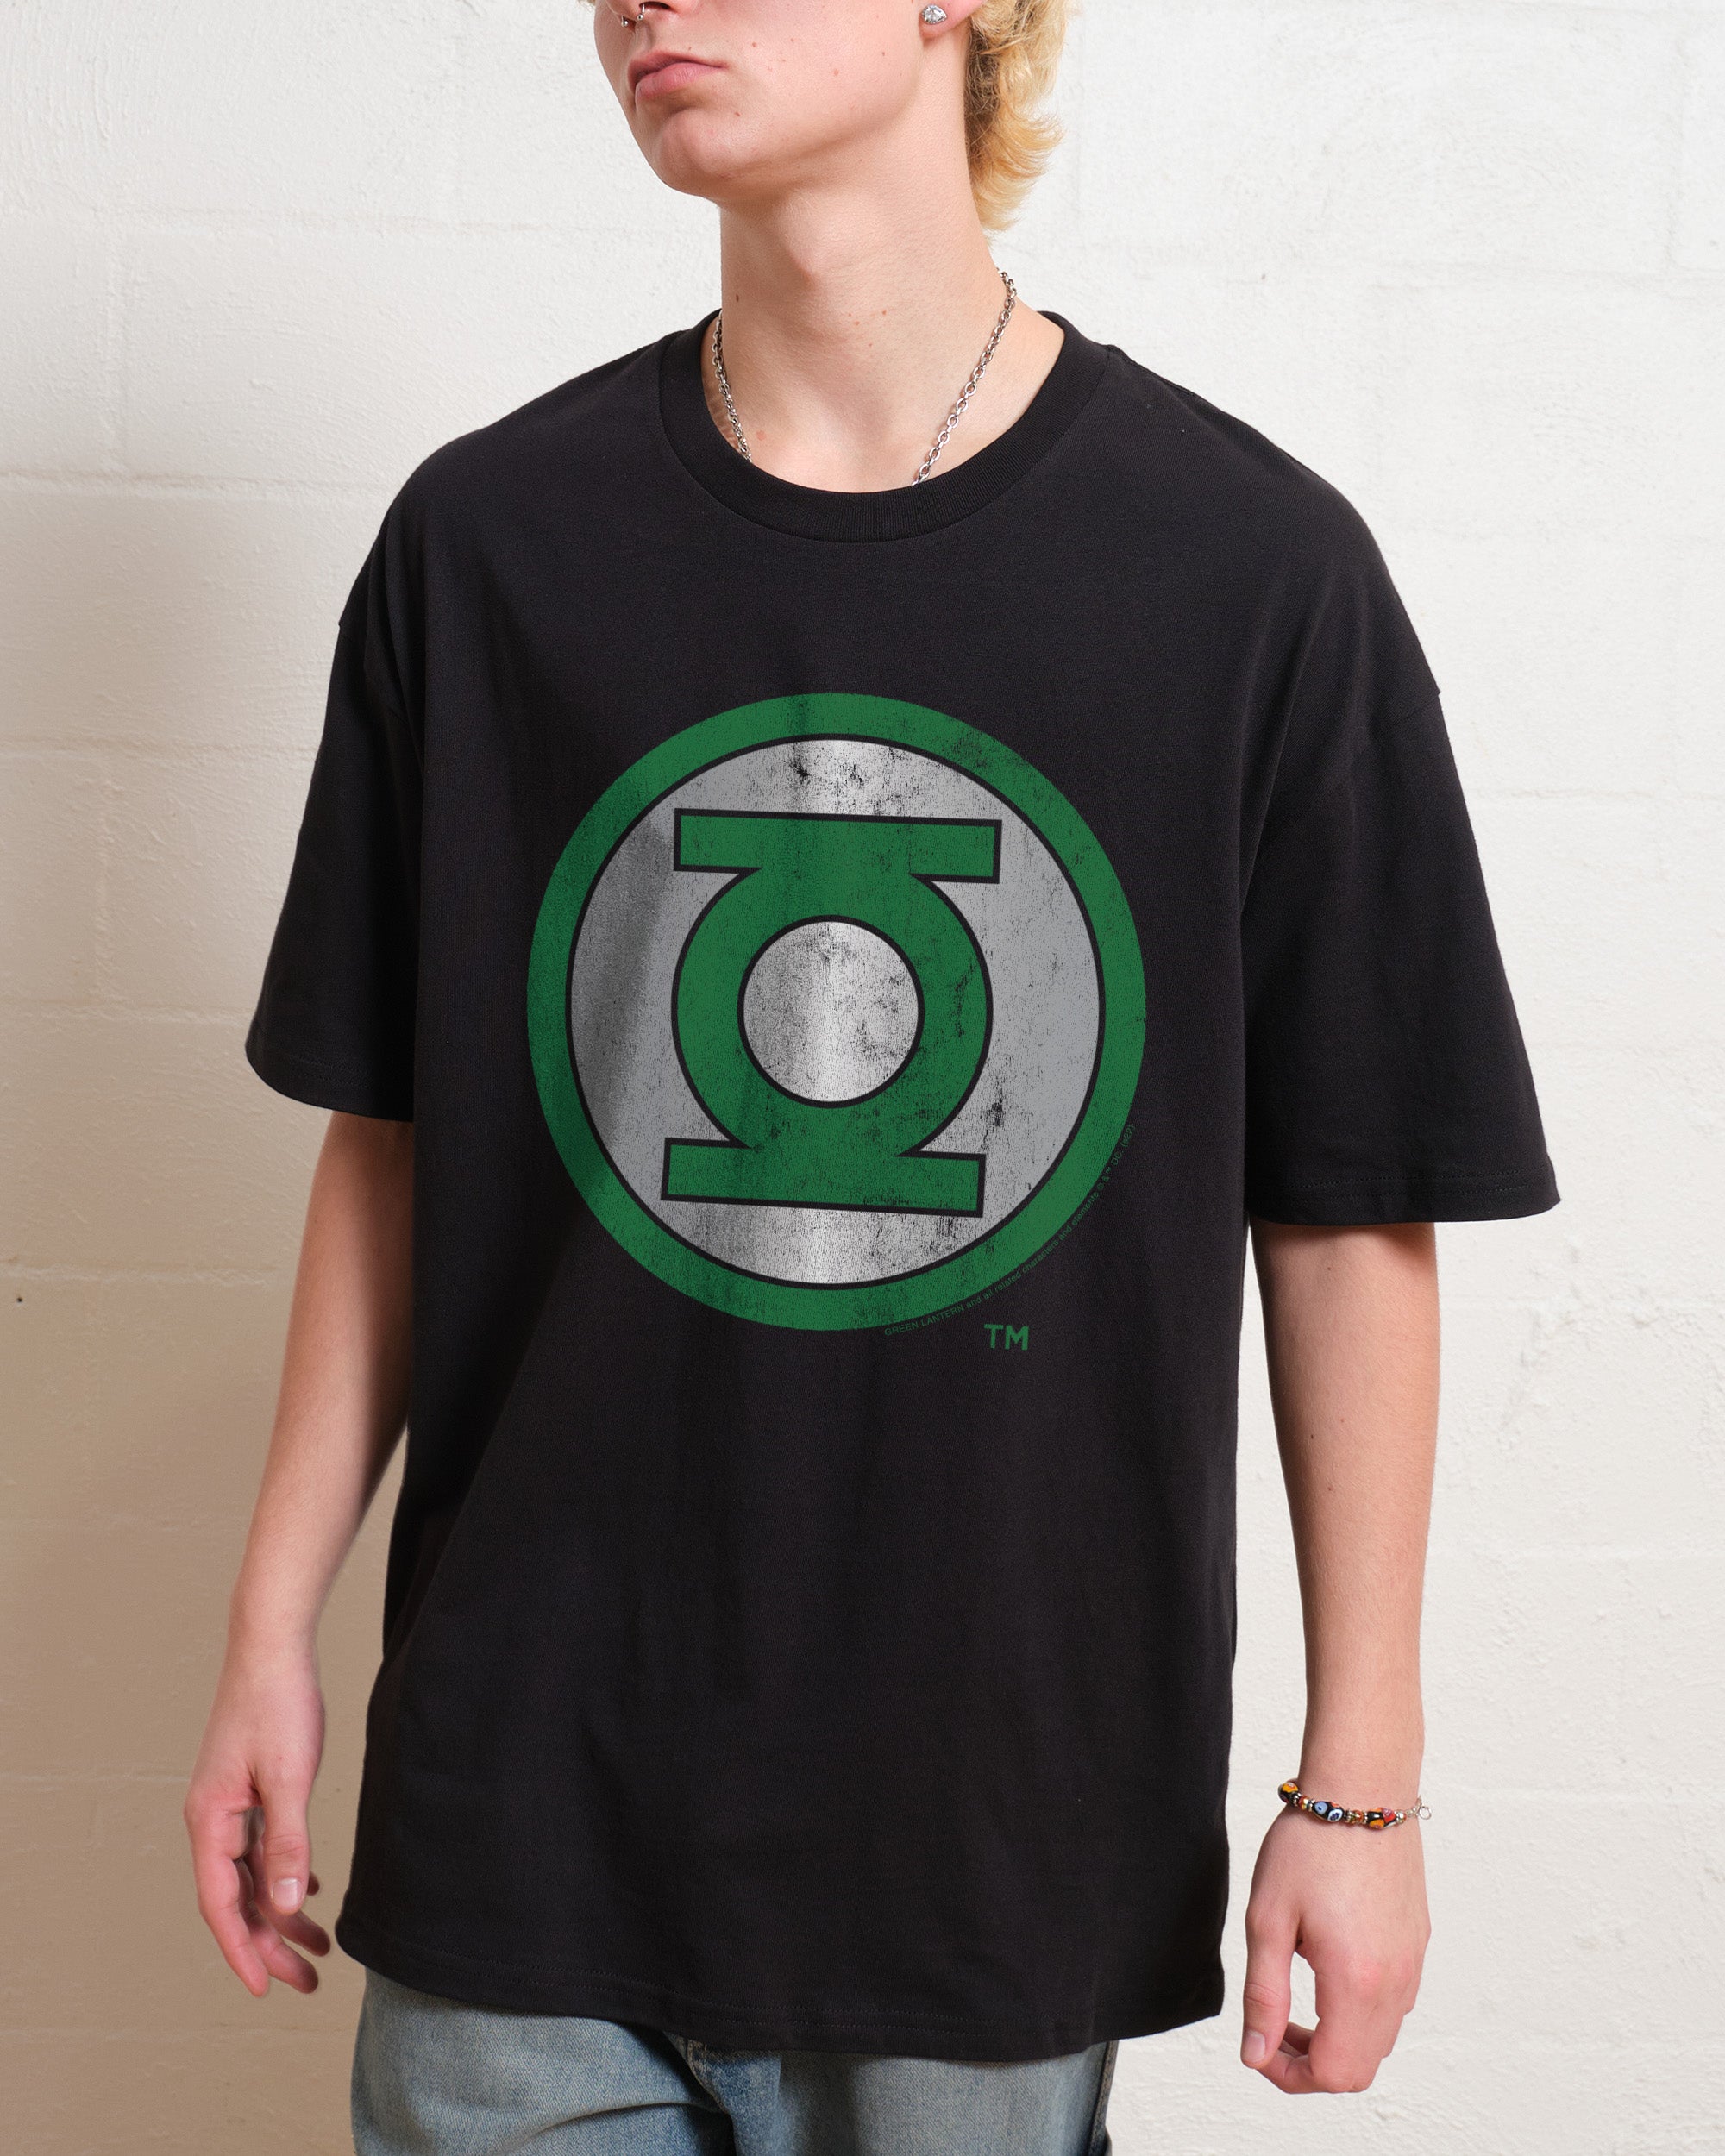 Green Lantern Logo T-Shirt